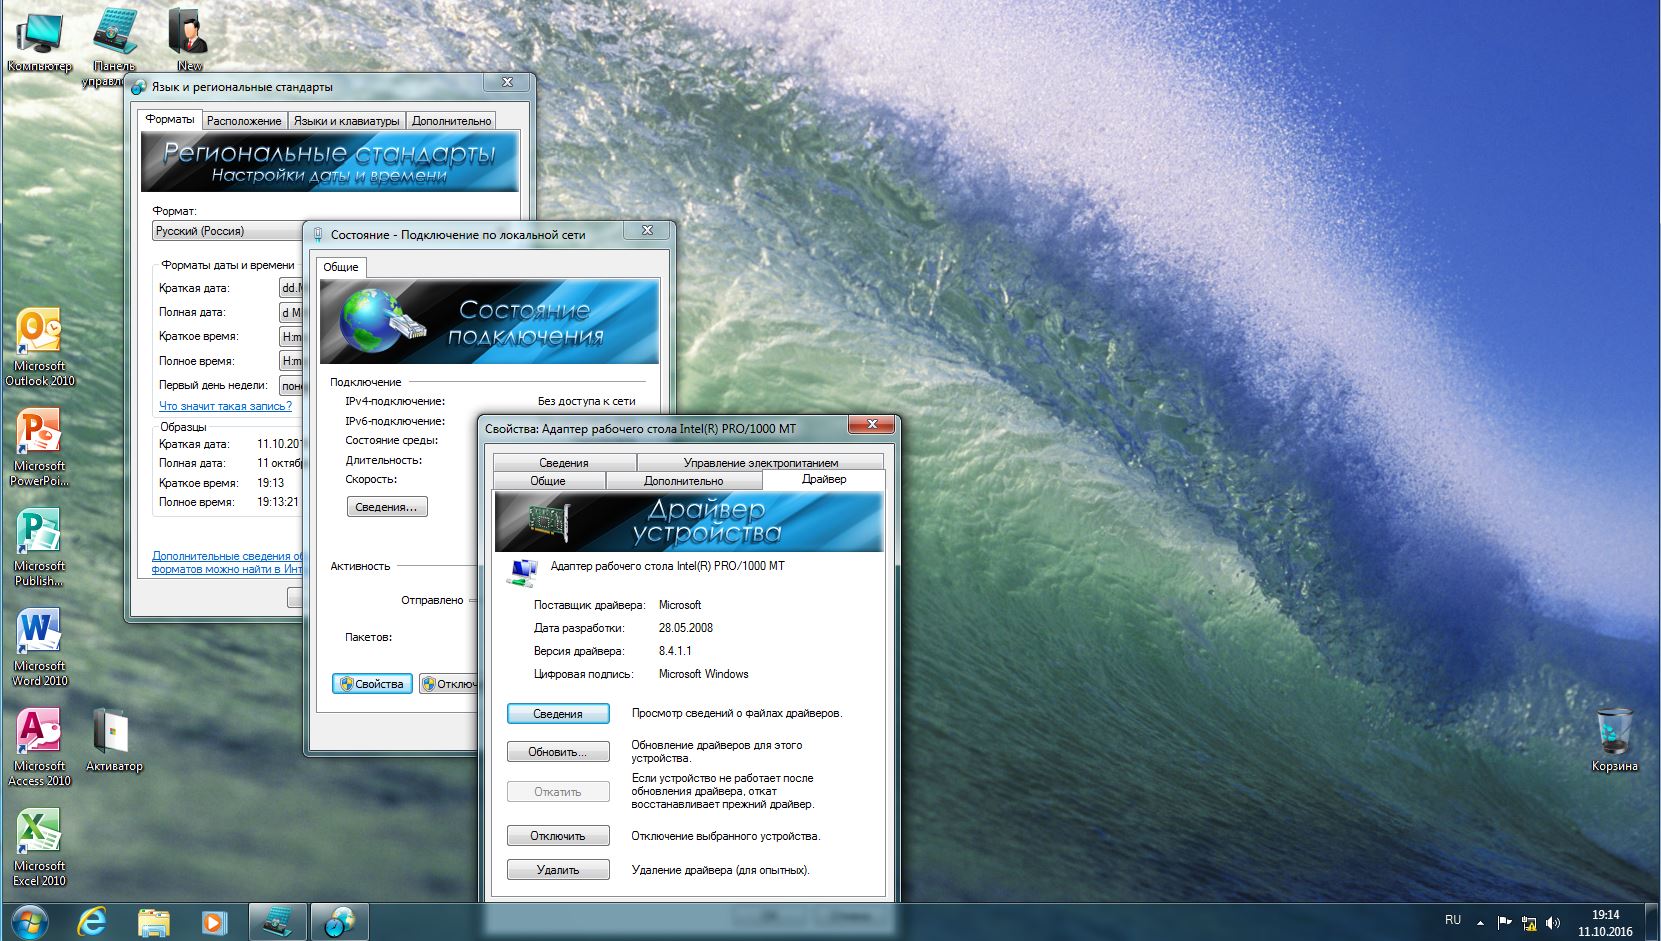 Windows 7 x86x64 Ultimate & Office2010 by UralSOFT v.86.16 - «Windows»